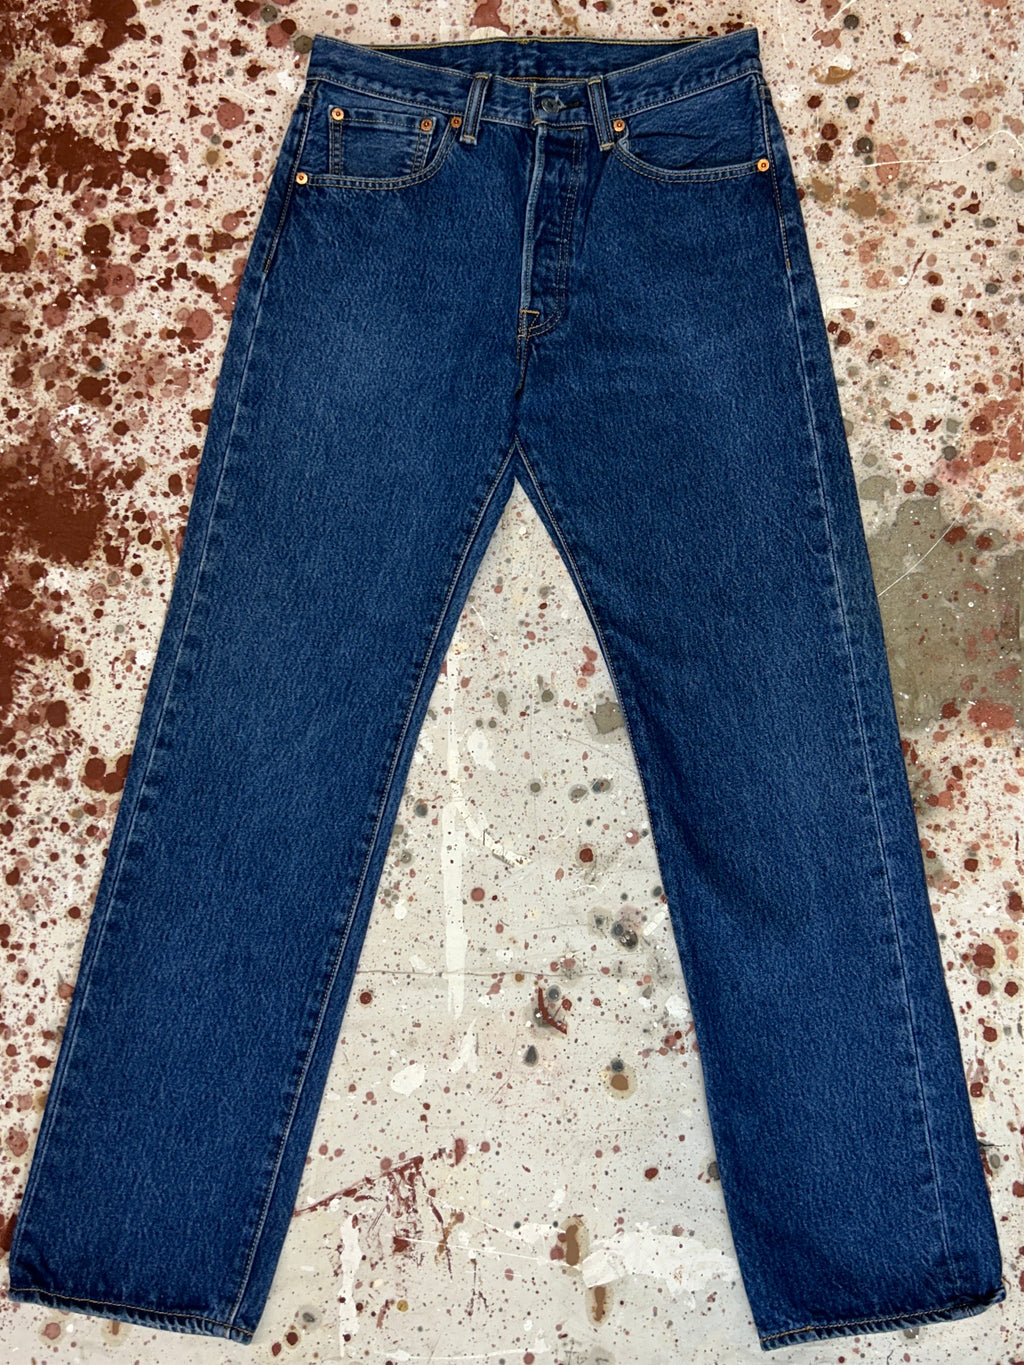 Vintage Levi's 501 Dark Few-Wash Denim Jeans (JYJ0424-181)